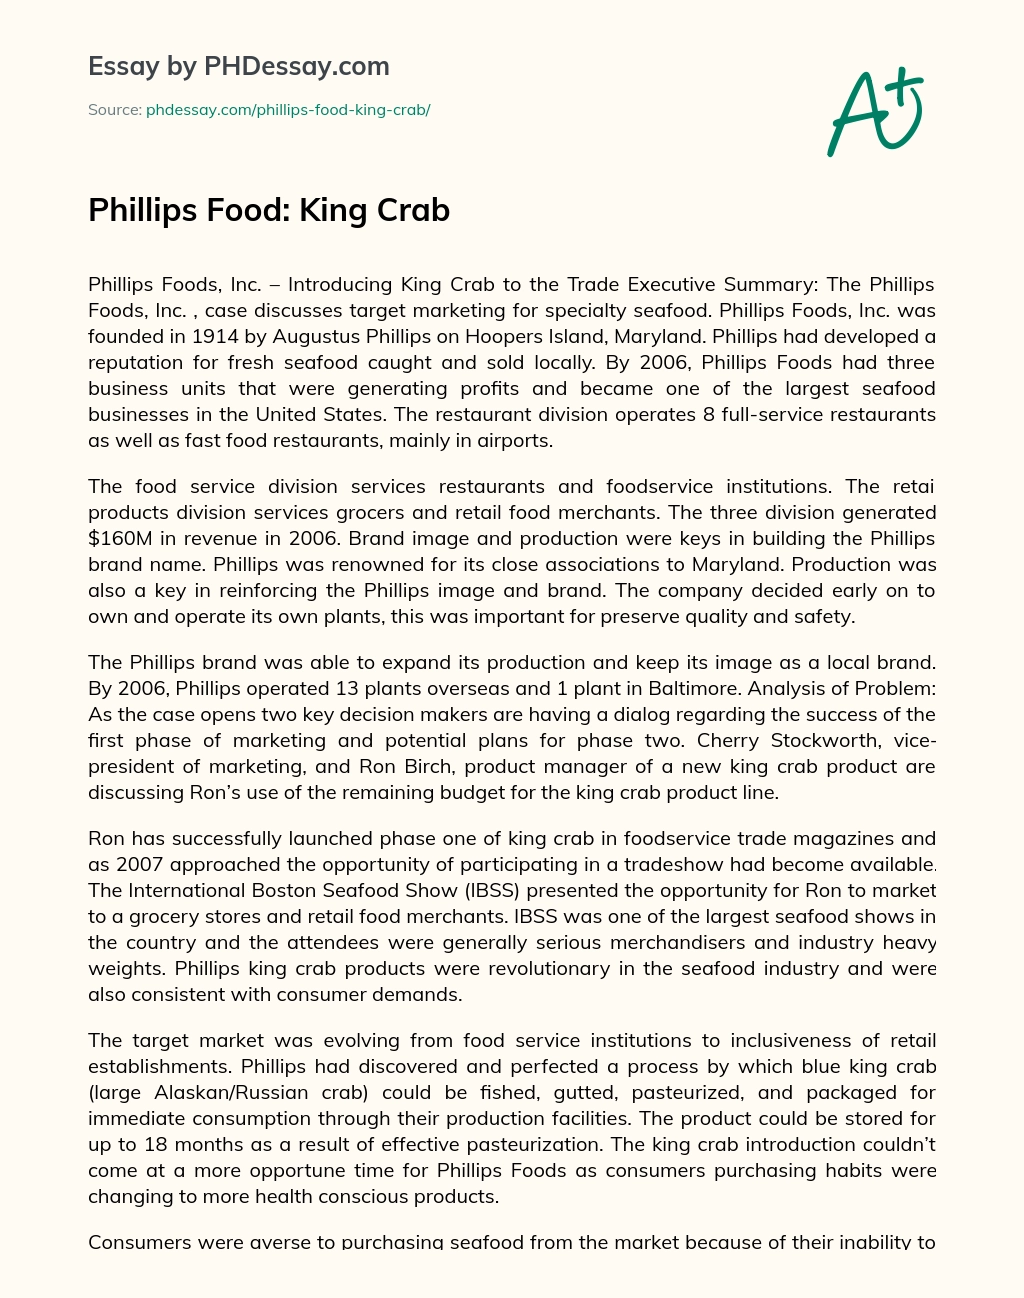 Phillips Food: King Crab essay